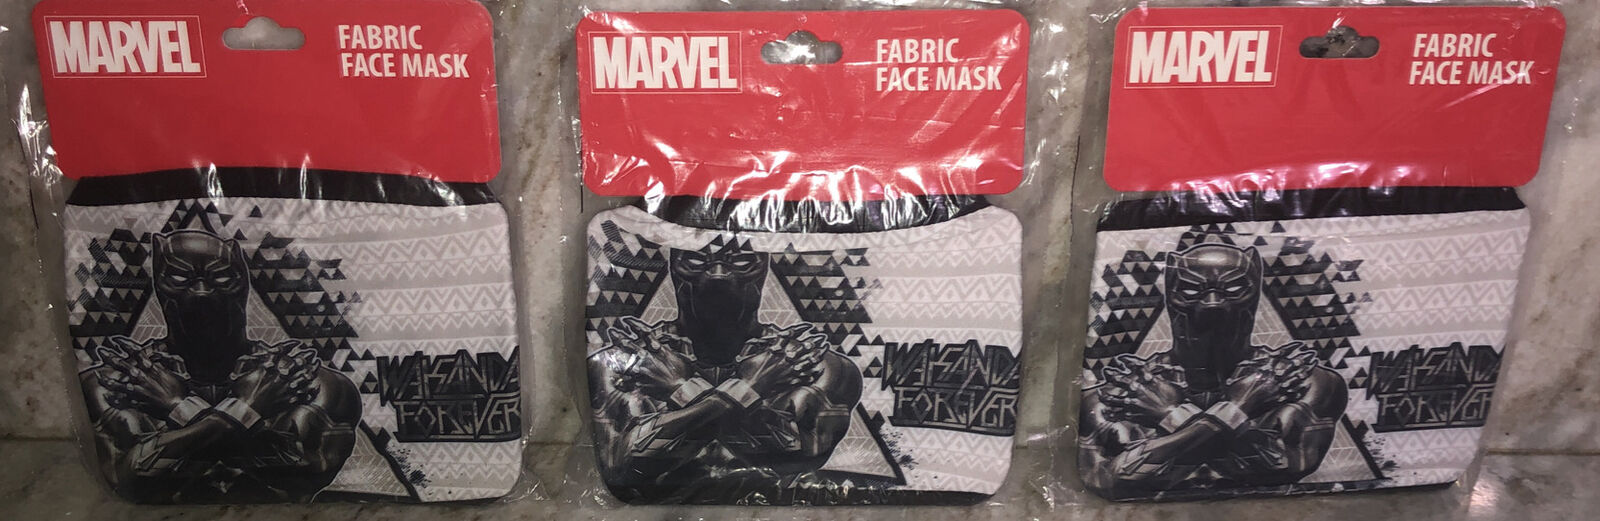 Black Panther Marvel Adult Lot Of 3 Fabric Face Masks Black/white-new-ship N24hr